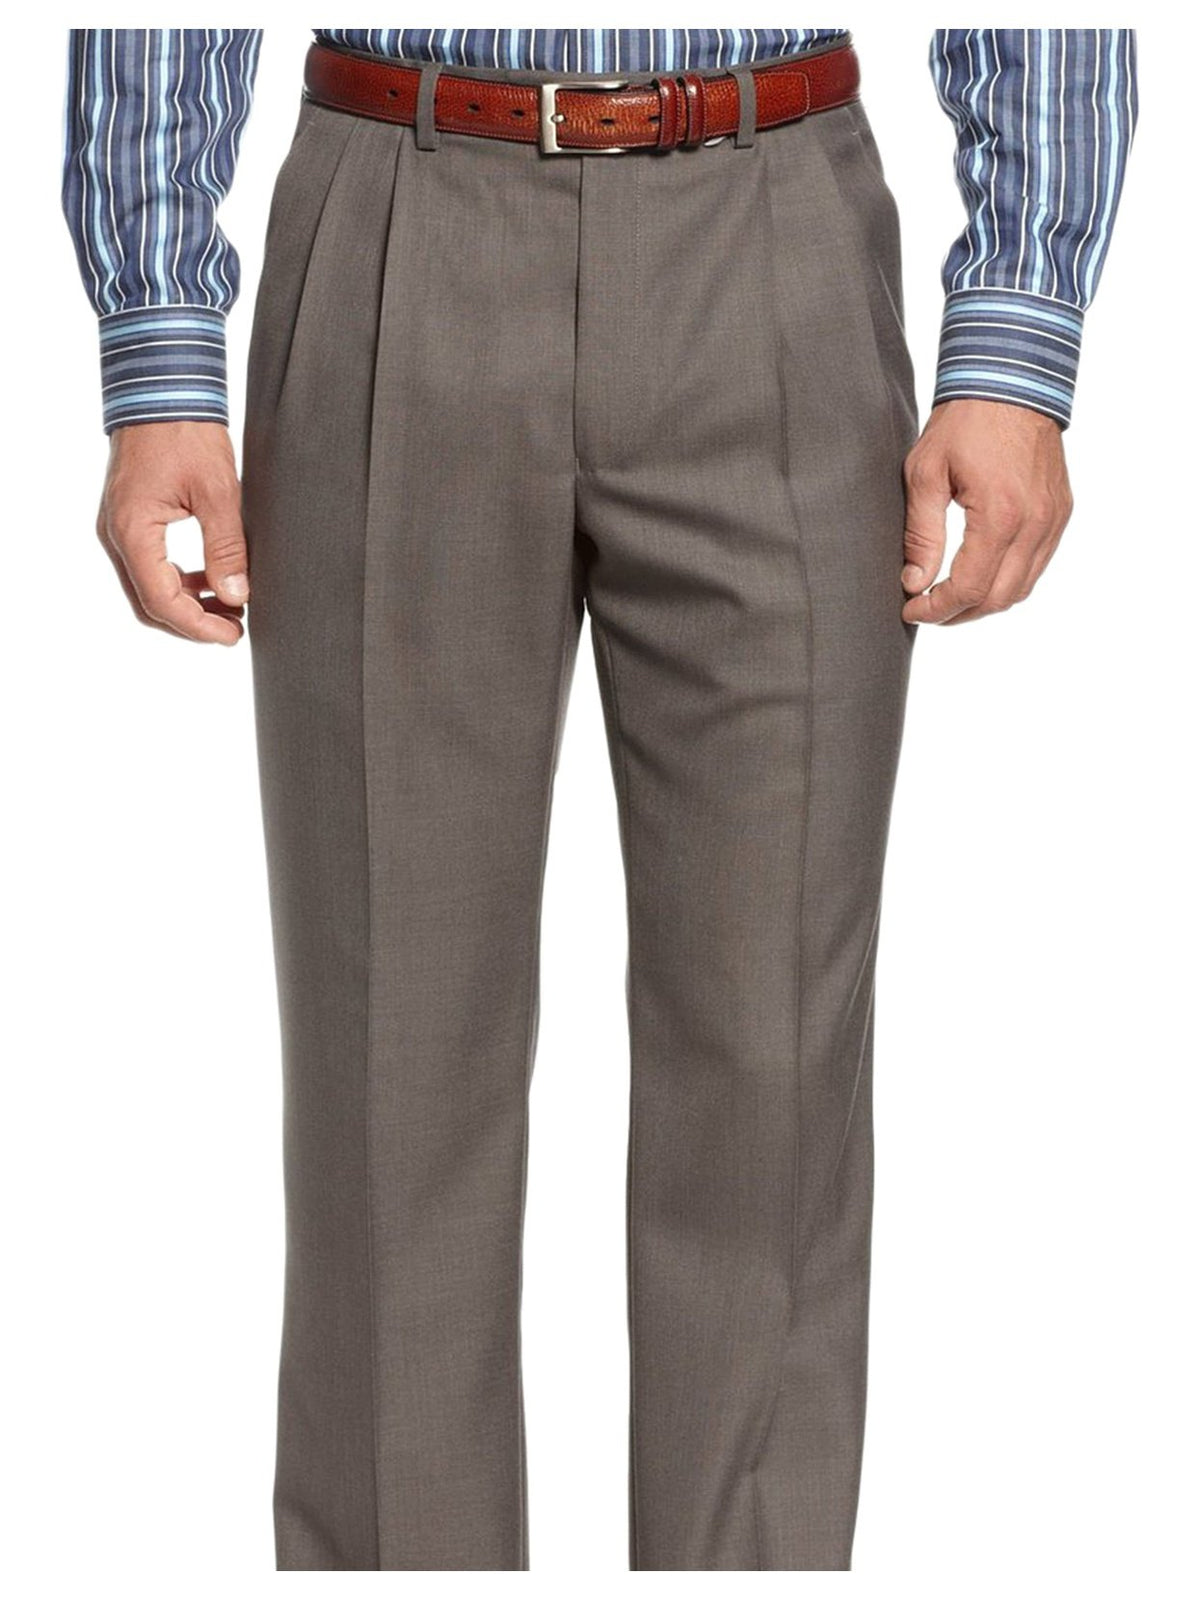 Ralph Lauren Classic Fit Taupe Textured Double Pleated Washable Dress Pants - The Suit Depot